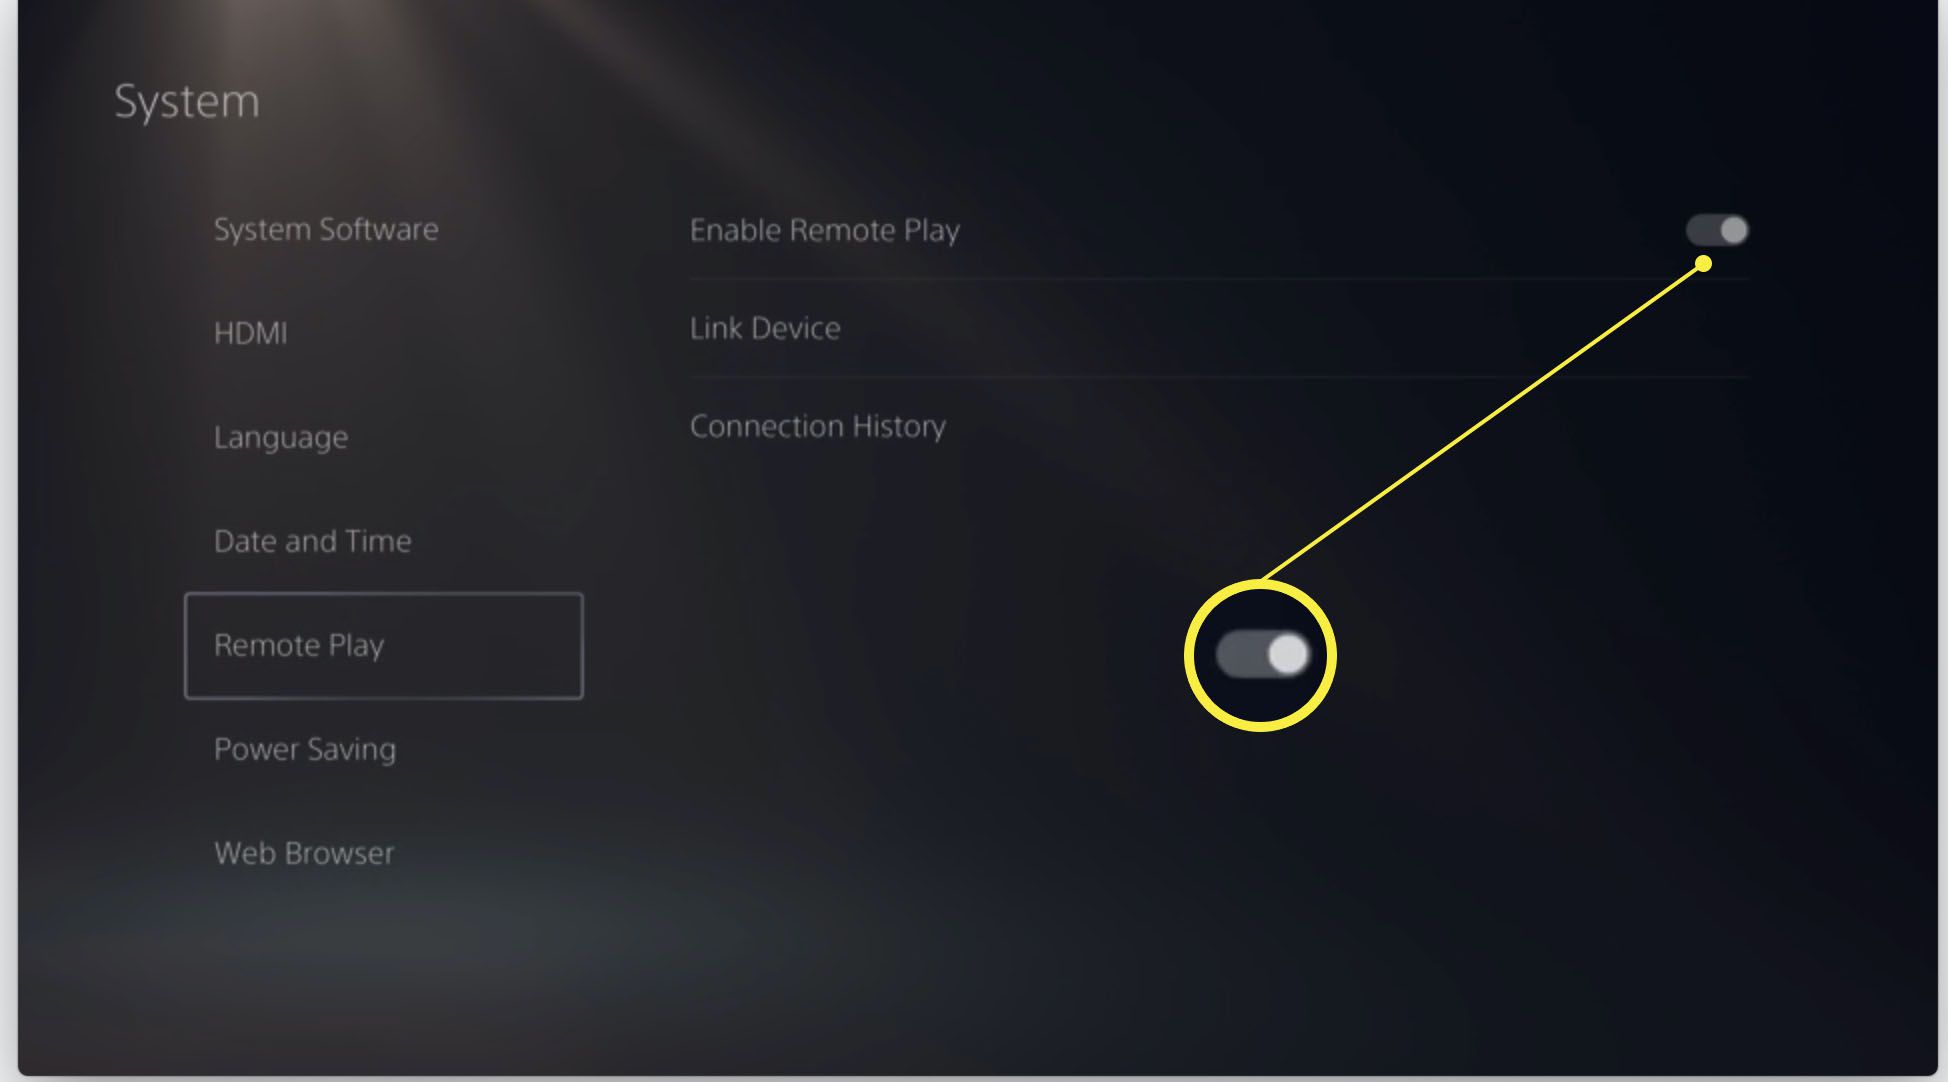 Playstation 5 med Enable Remote Play markerad